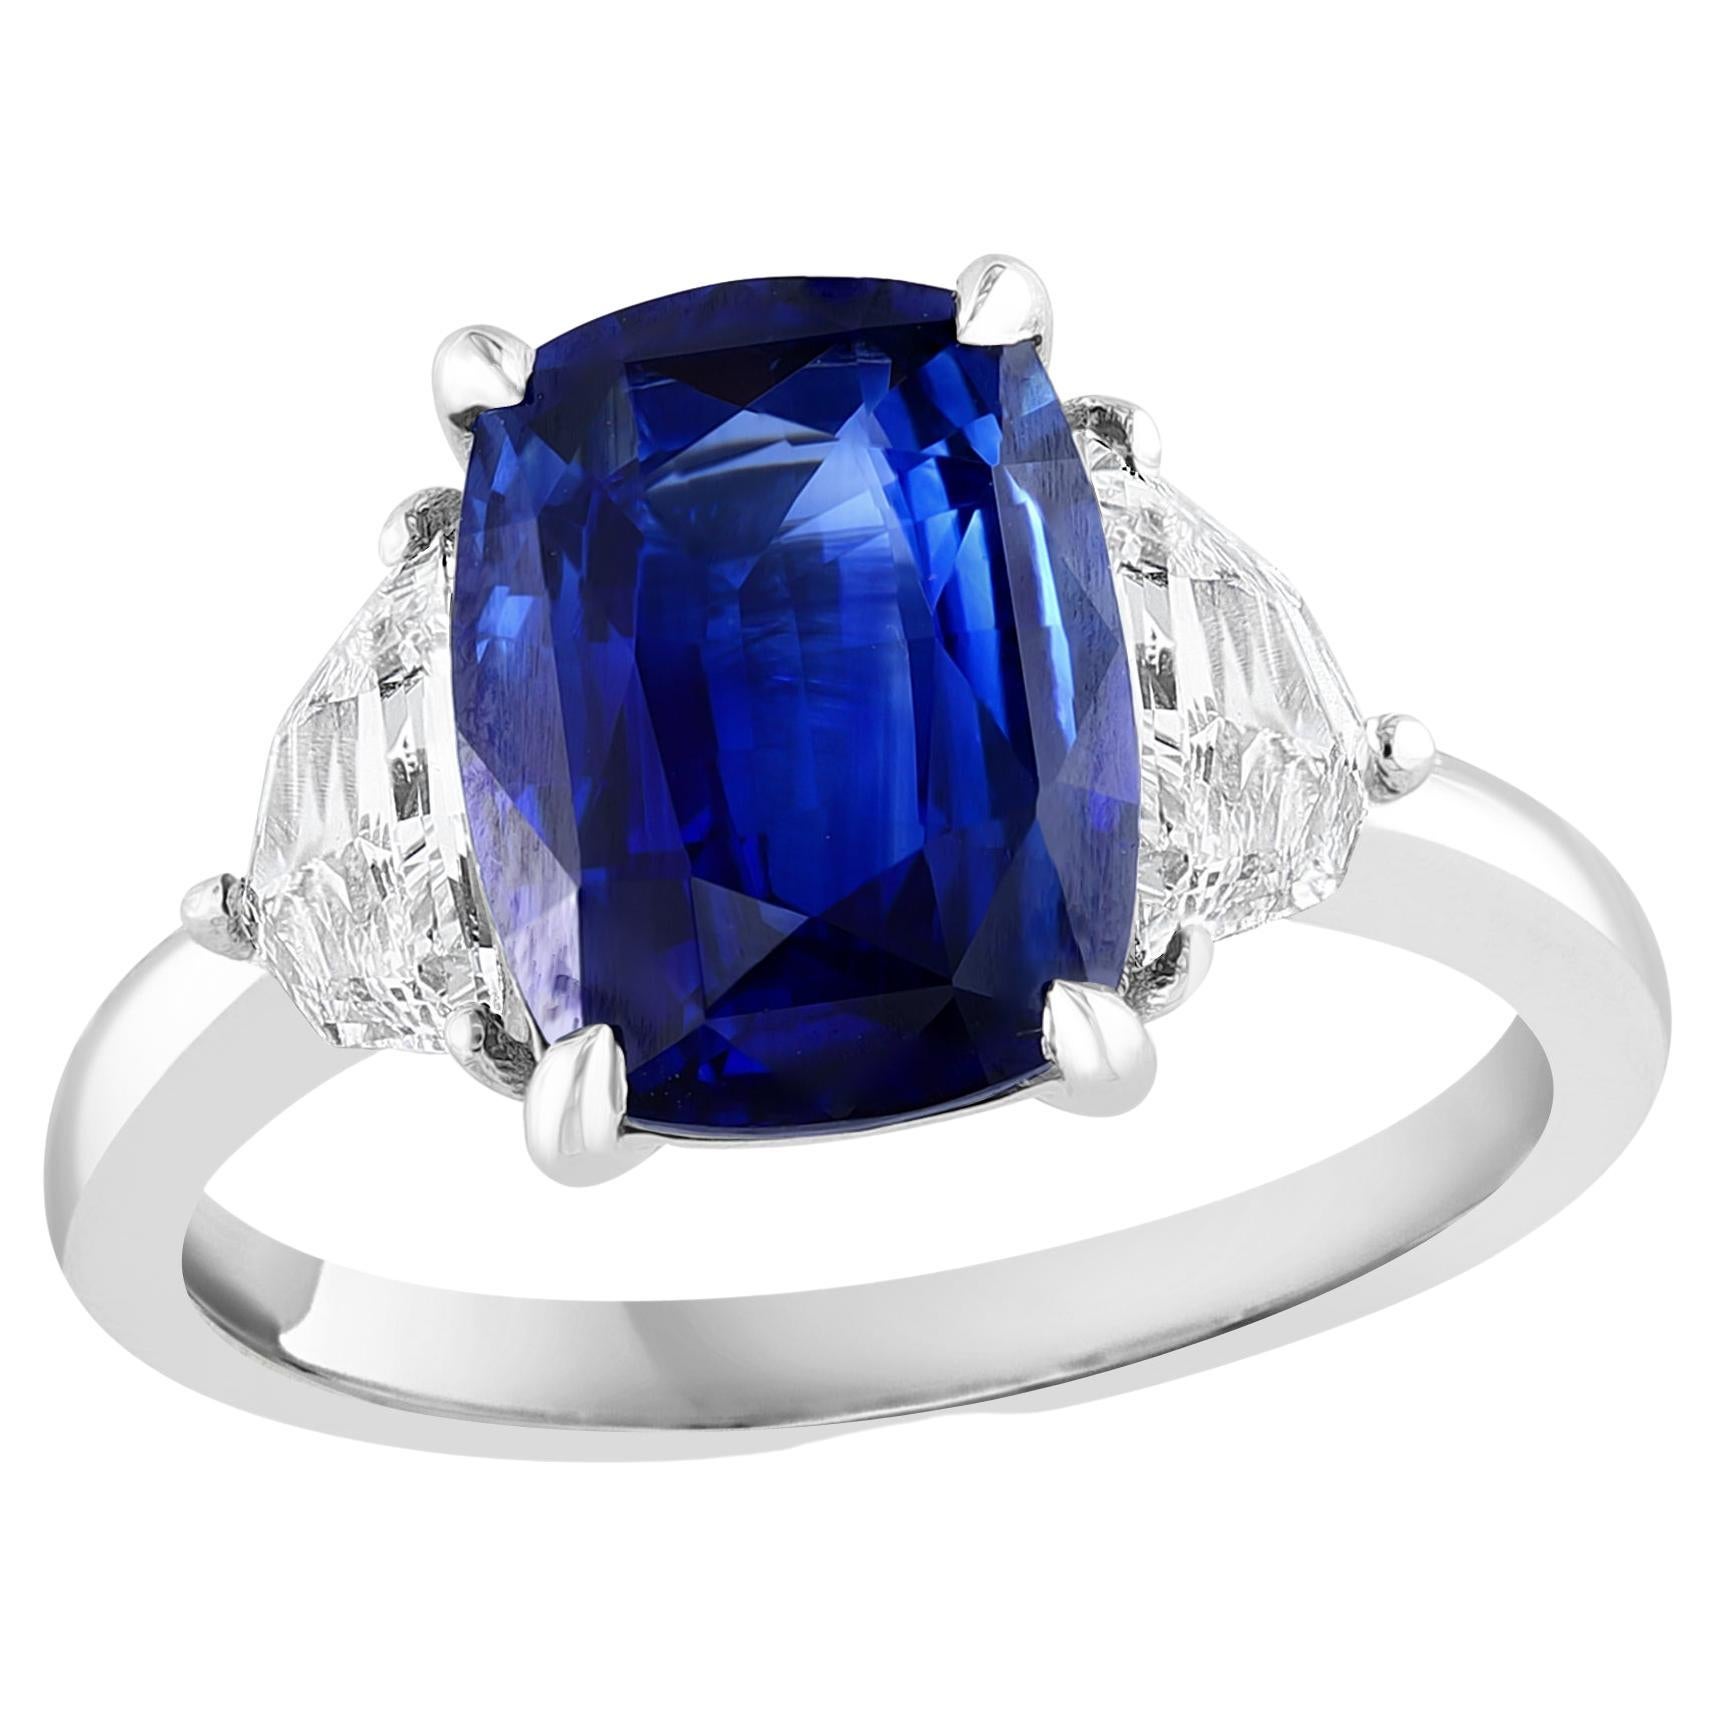 Certified 3.54 Carat Cushion Cut Blue Sapphire Diamond 3-Stone Ring in Platinum